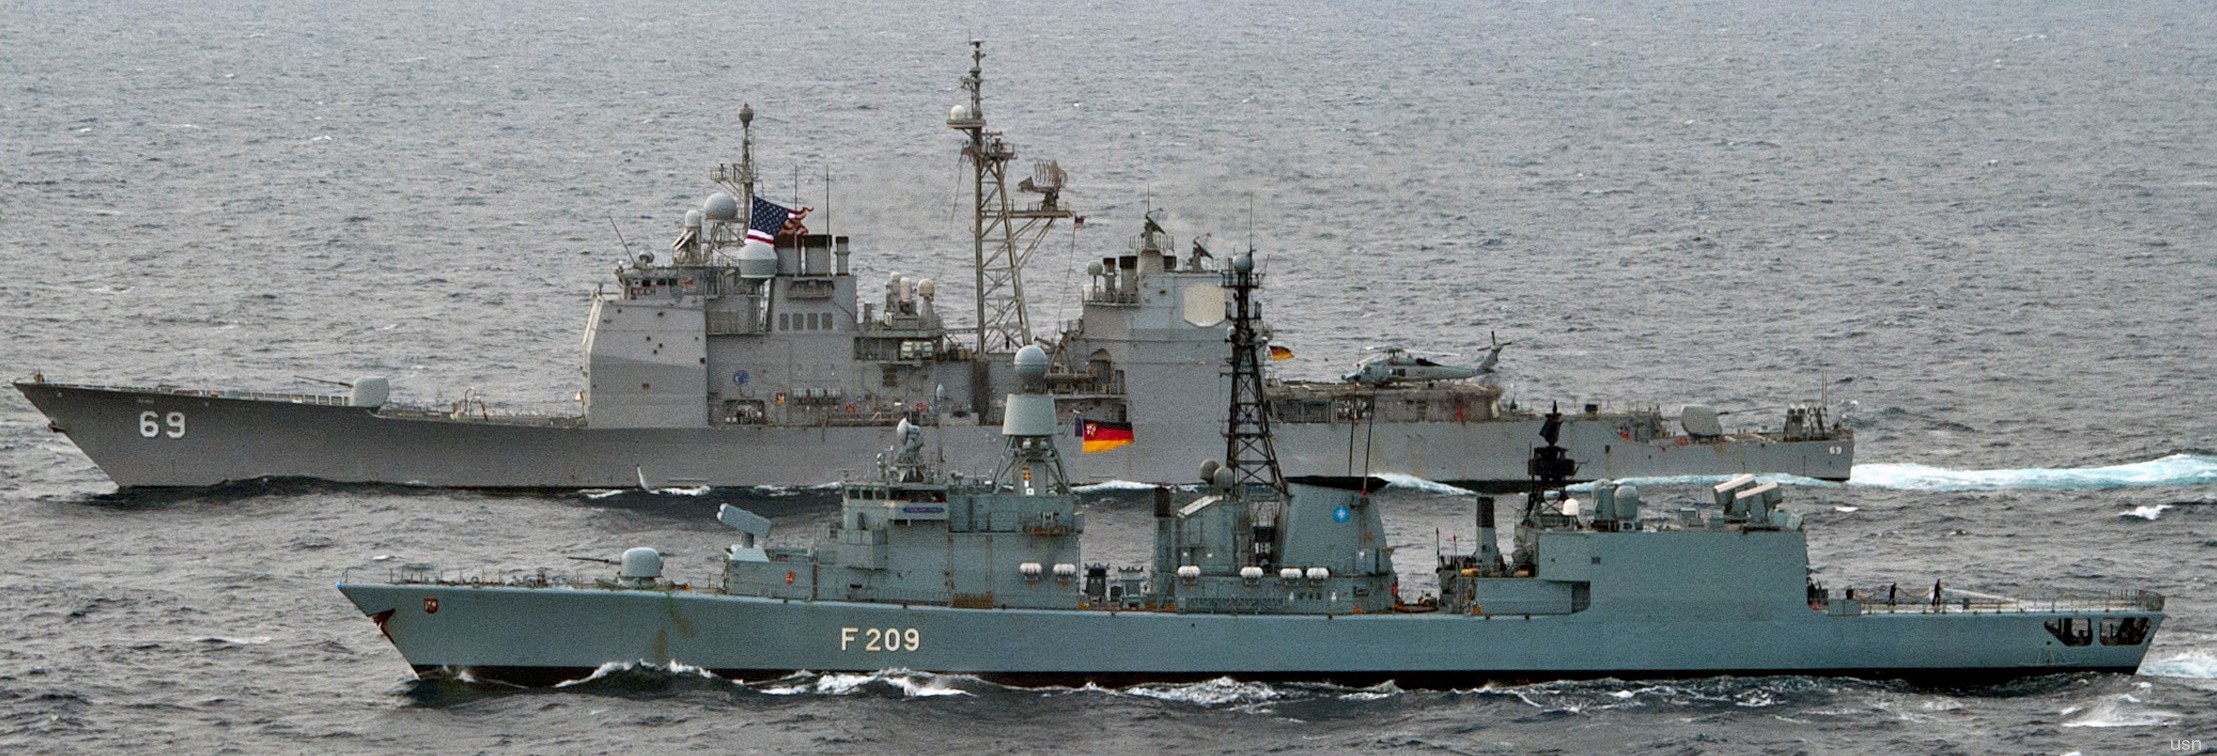 f-209 fgs rheinland-pfalz type 122 bremen class frigate german navy 06